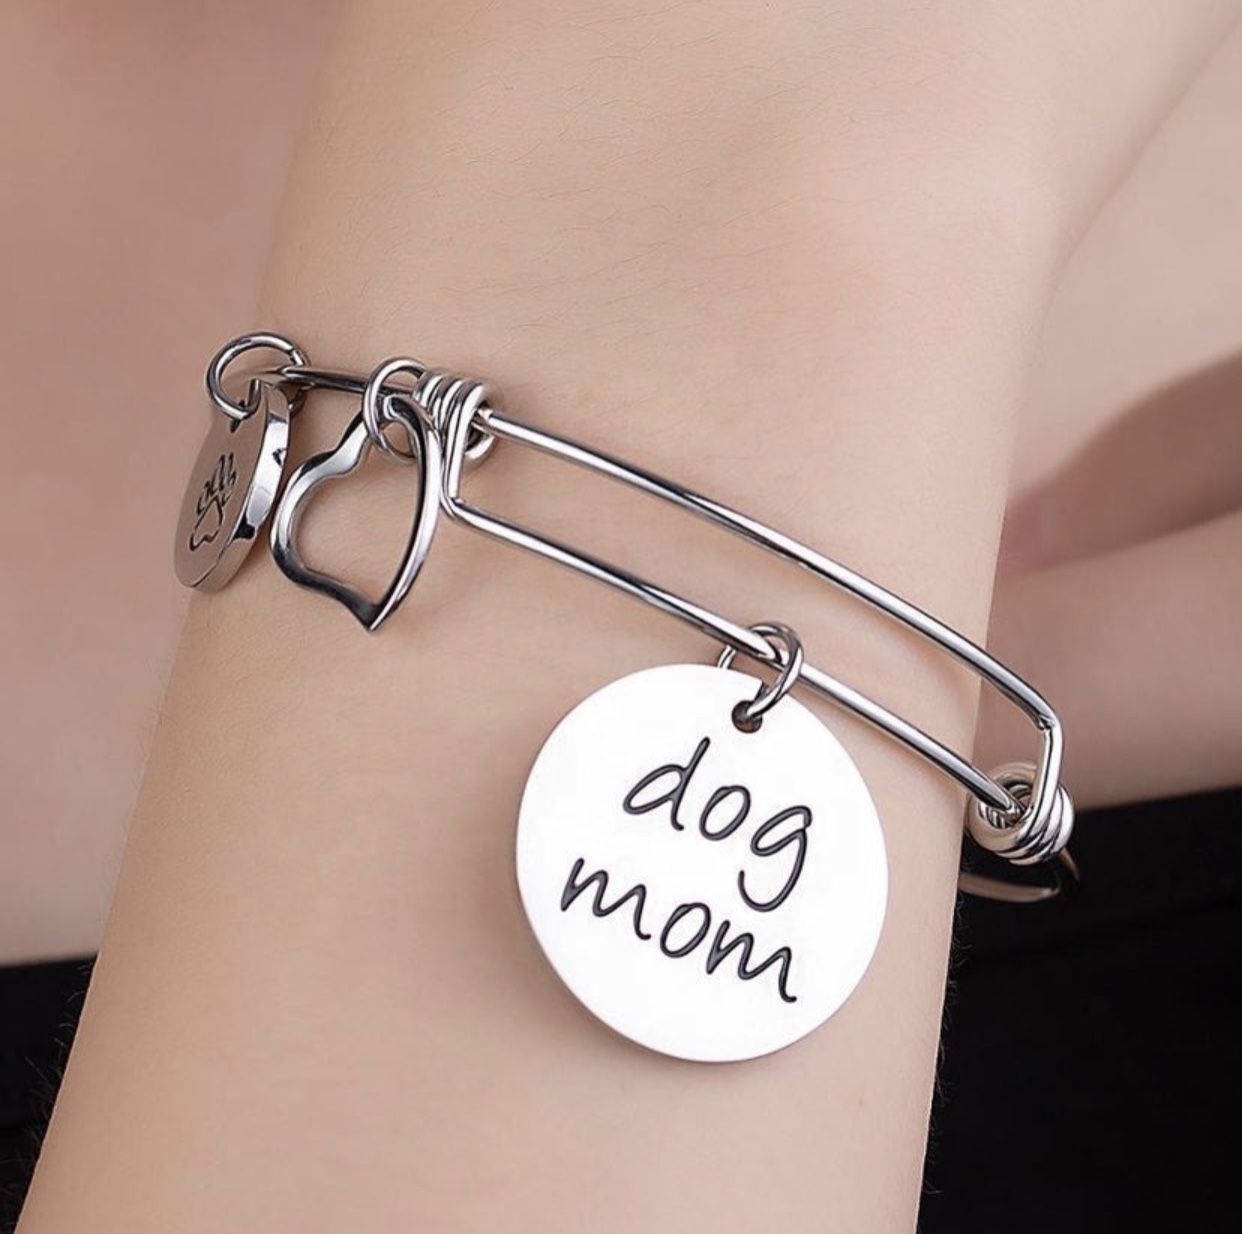 Charm bracelet for Dog moms 💕